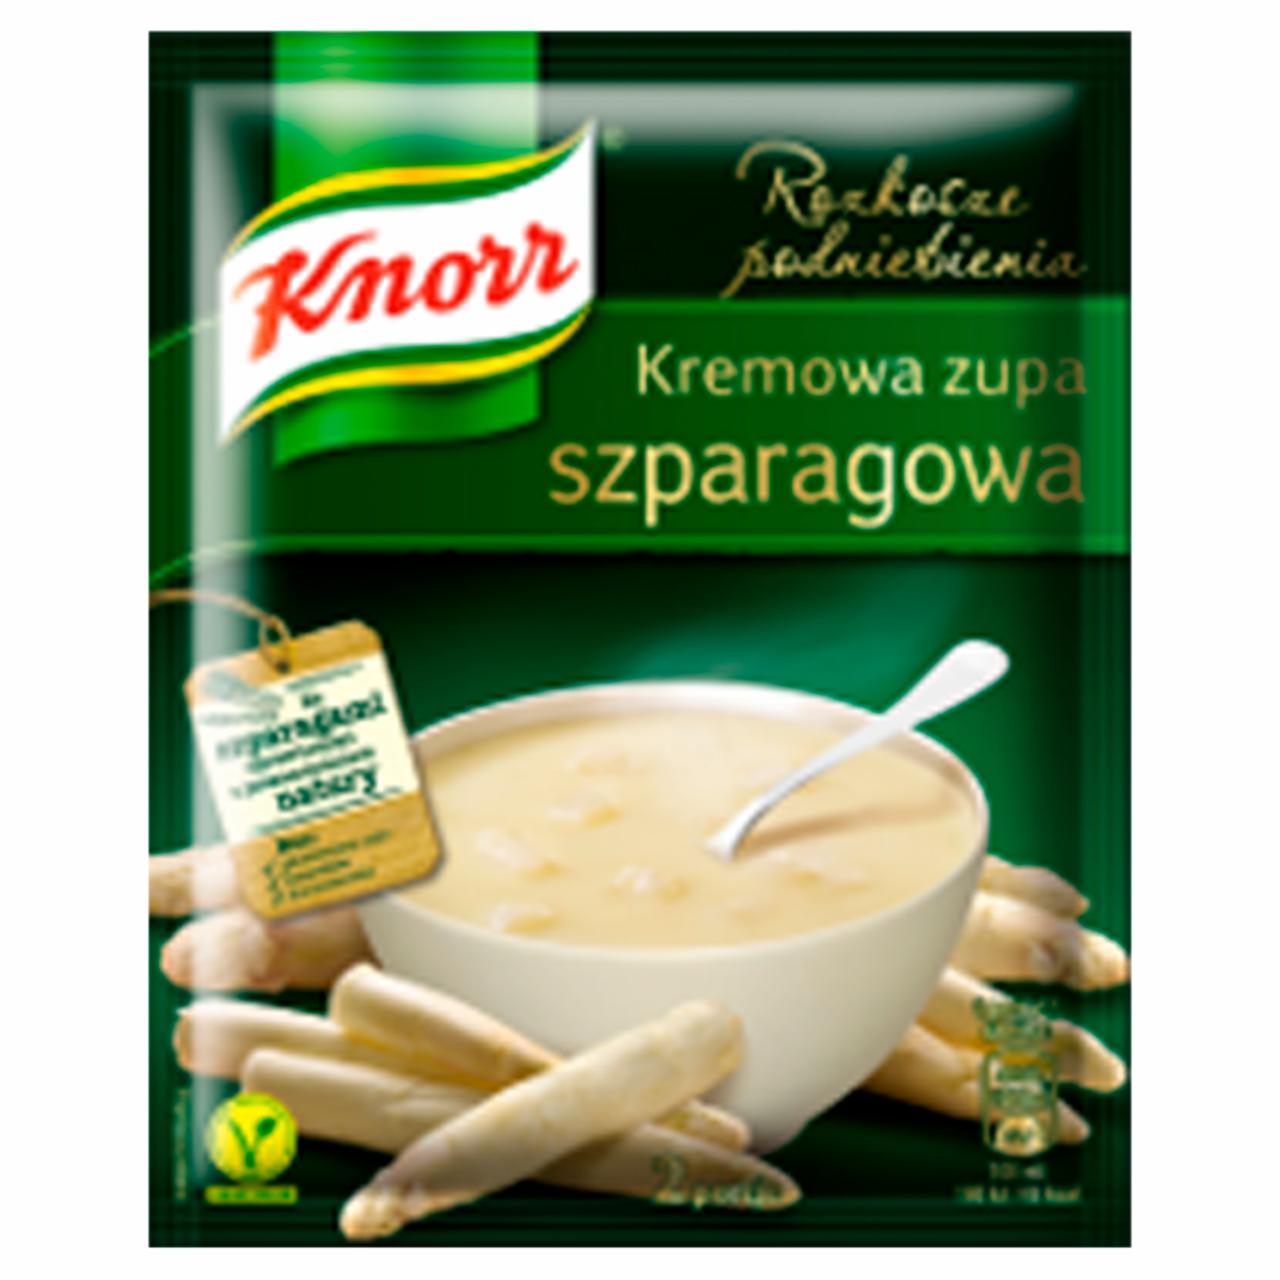 Photo - Knorr Rozkosze podniebienia Asparagus Creamy Soup 49 g